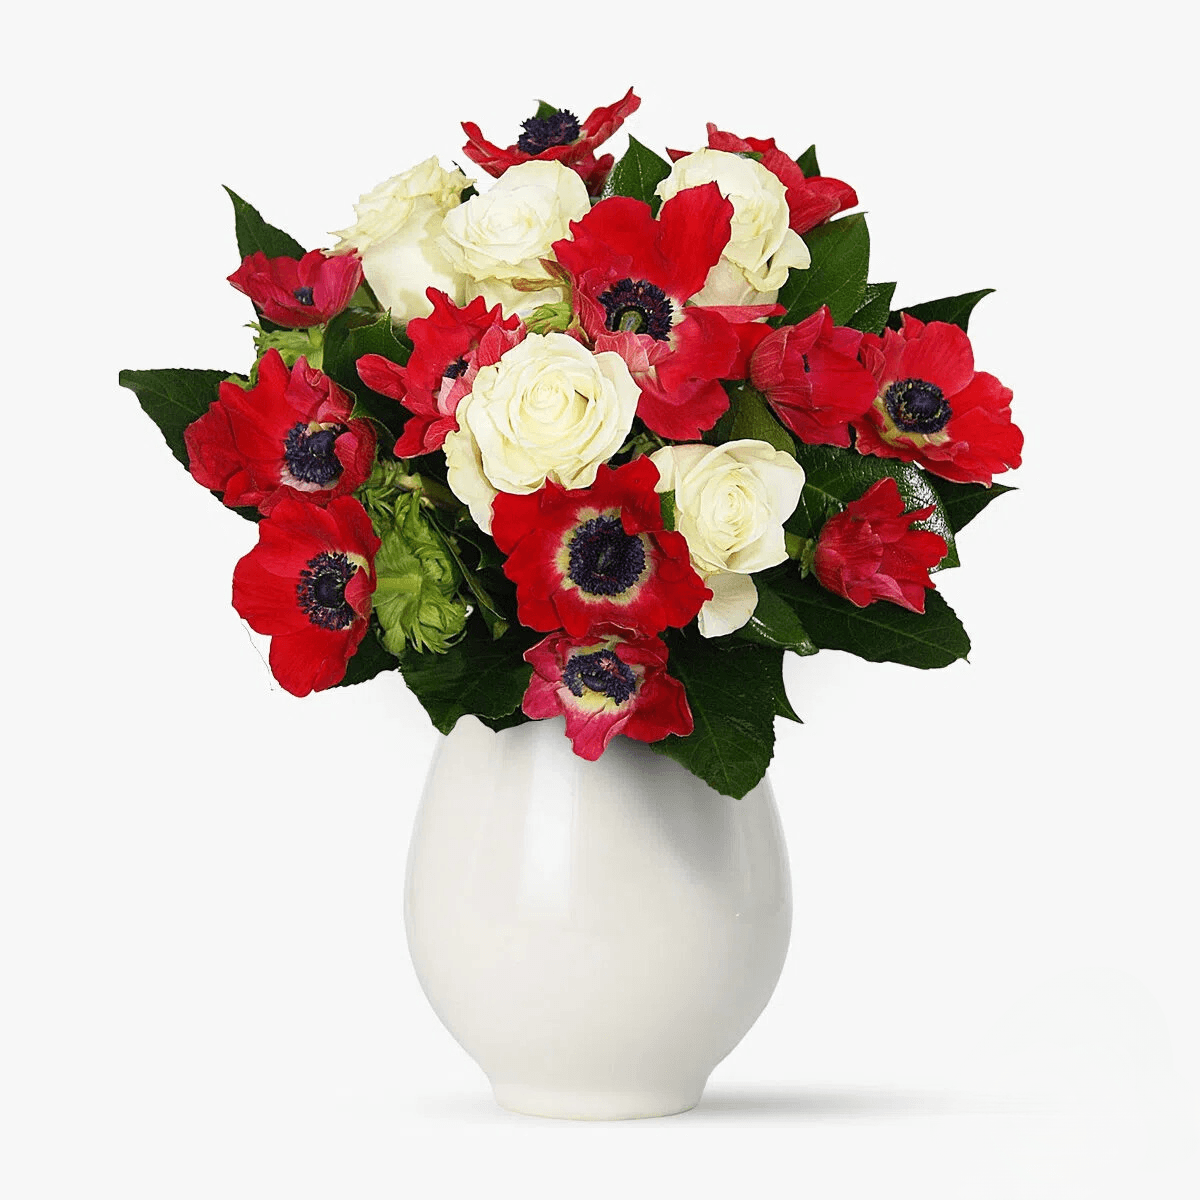 Buchet de anemone rosii si trandafiri albi – Standard